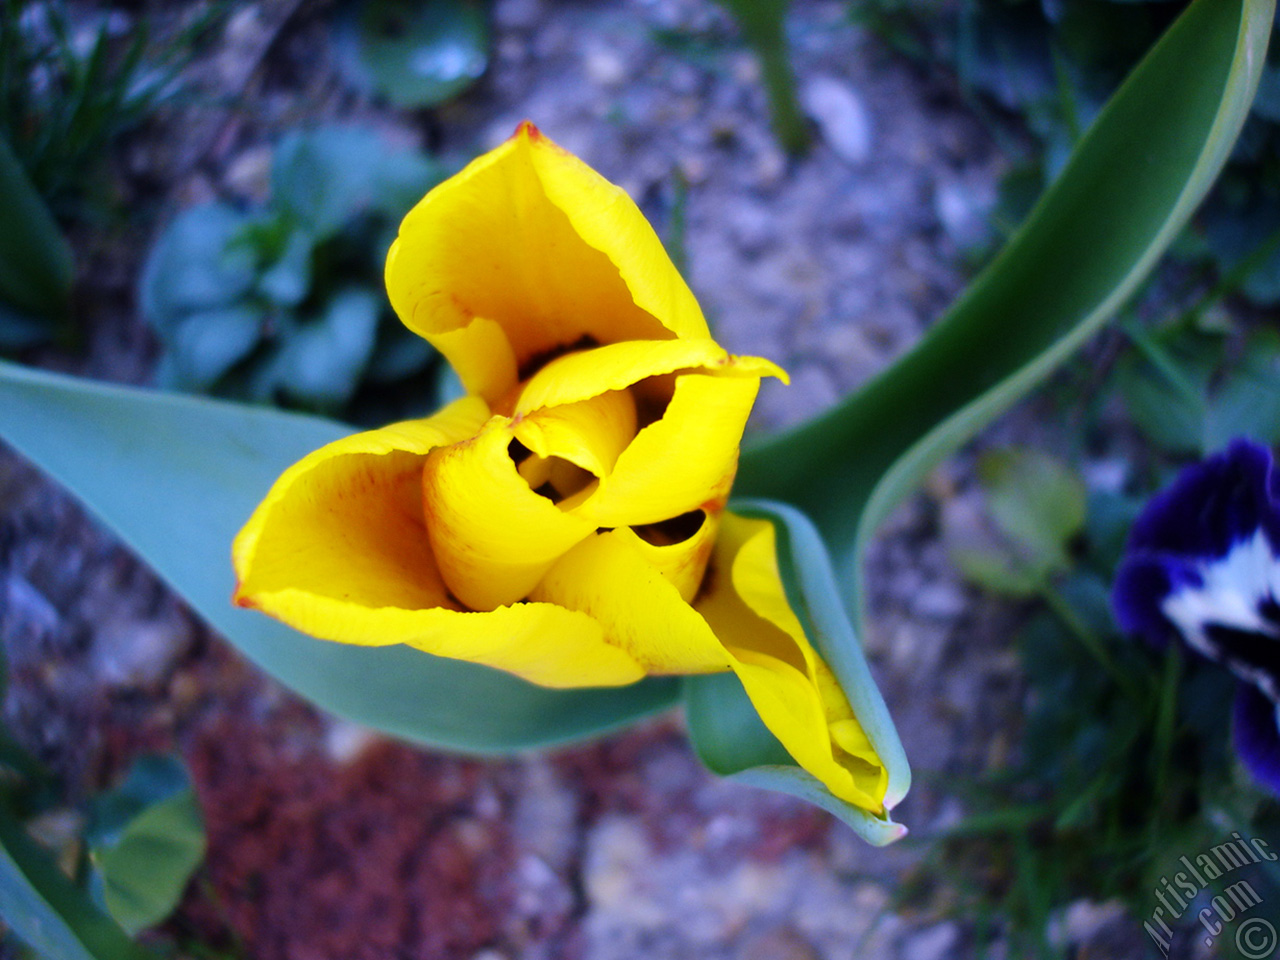 Yellow color Turkish-Ottoman Tulip photo.
